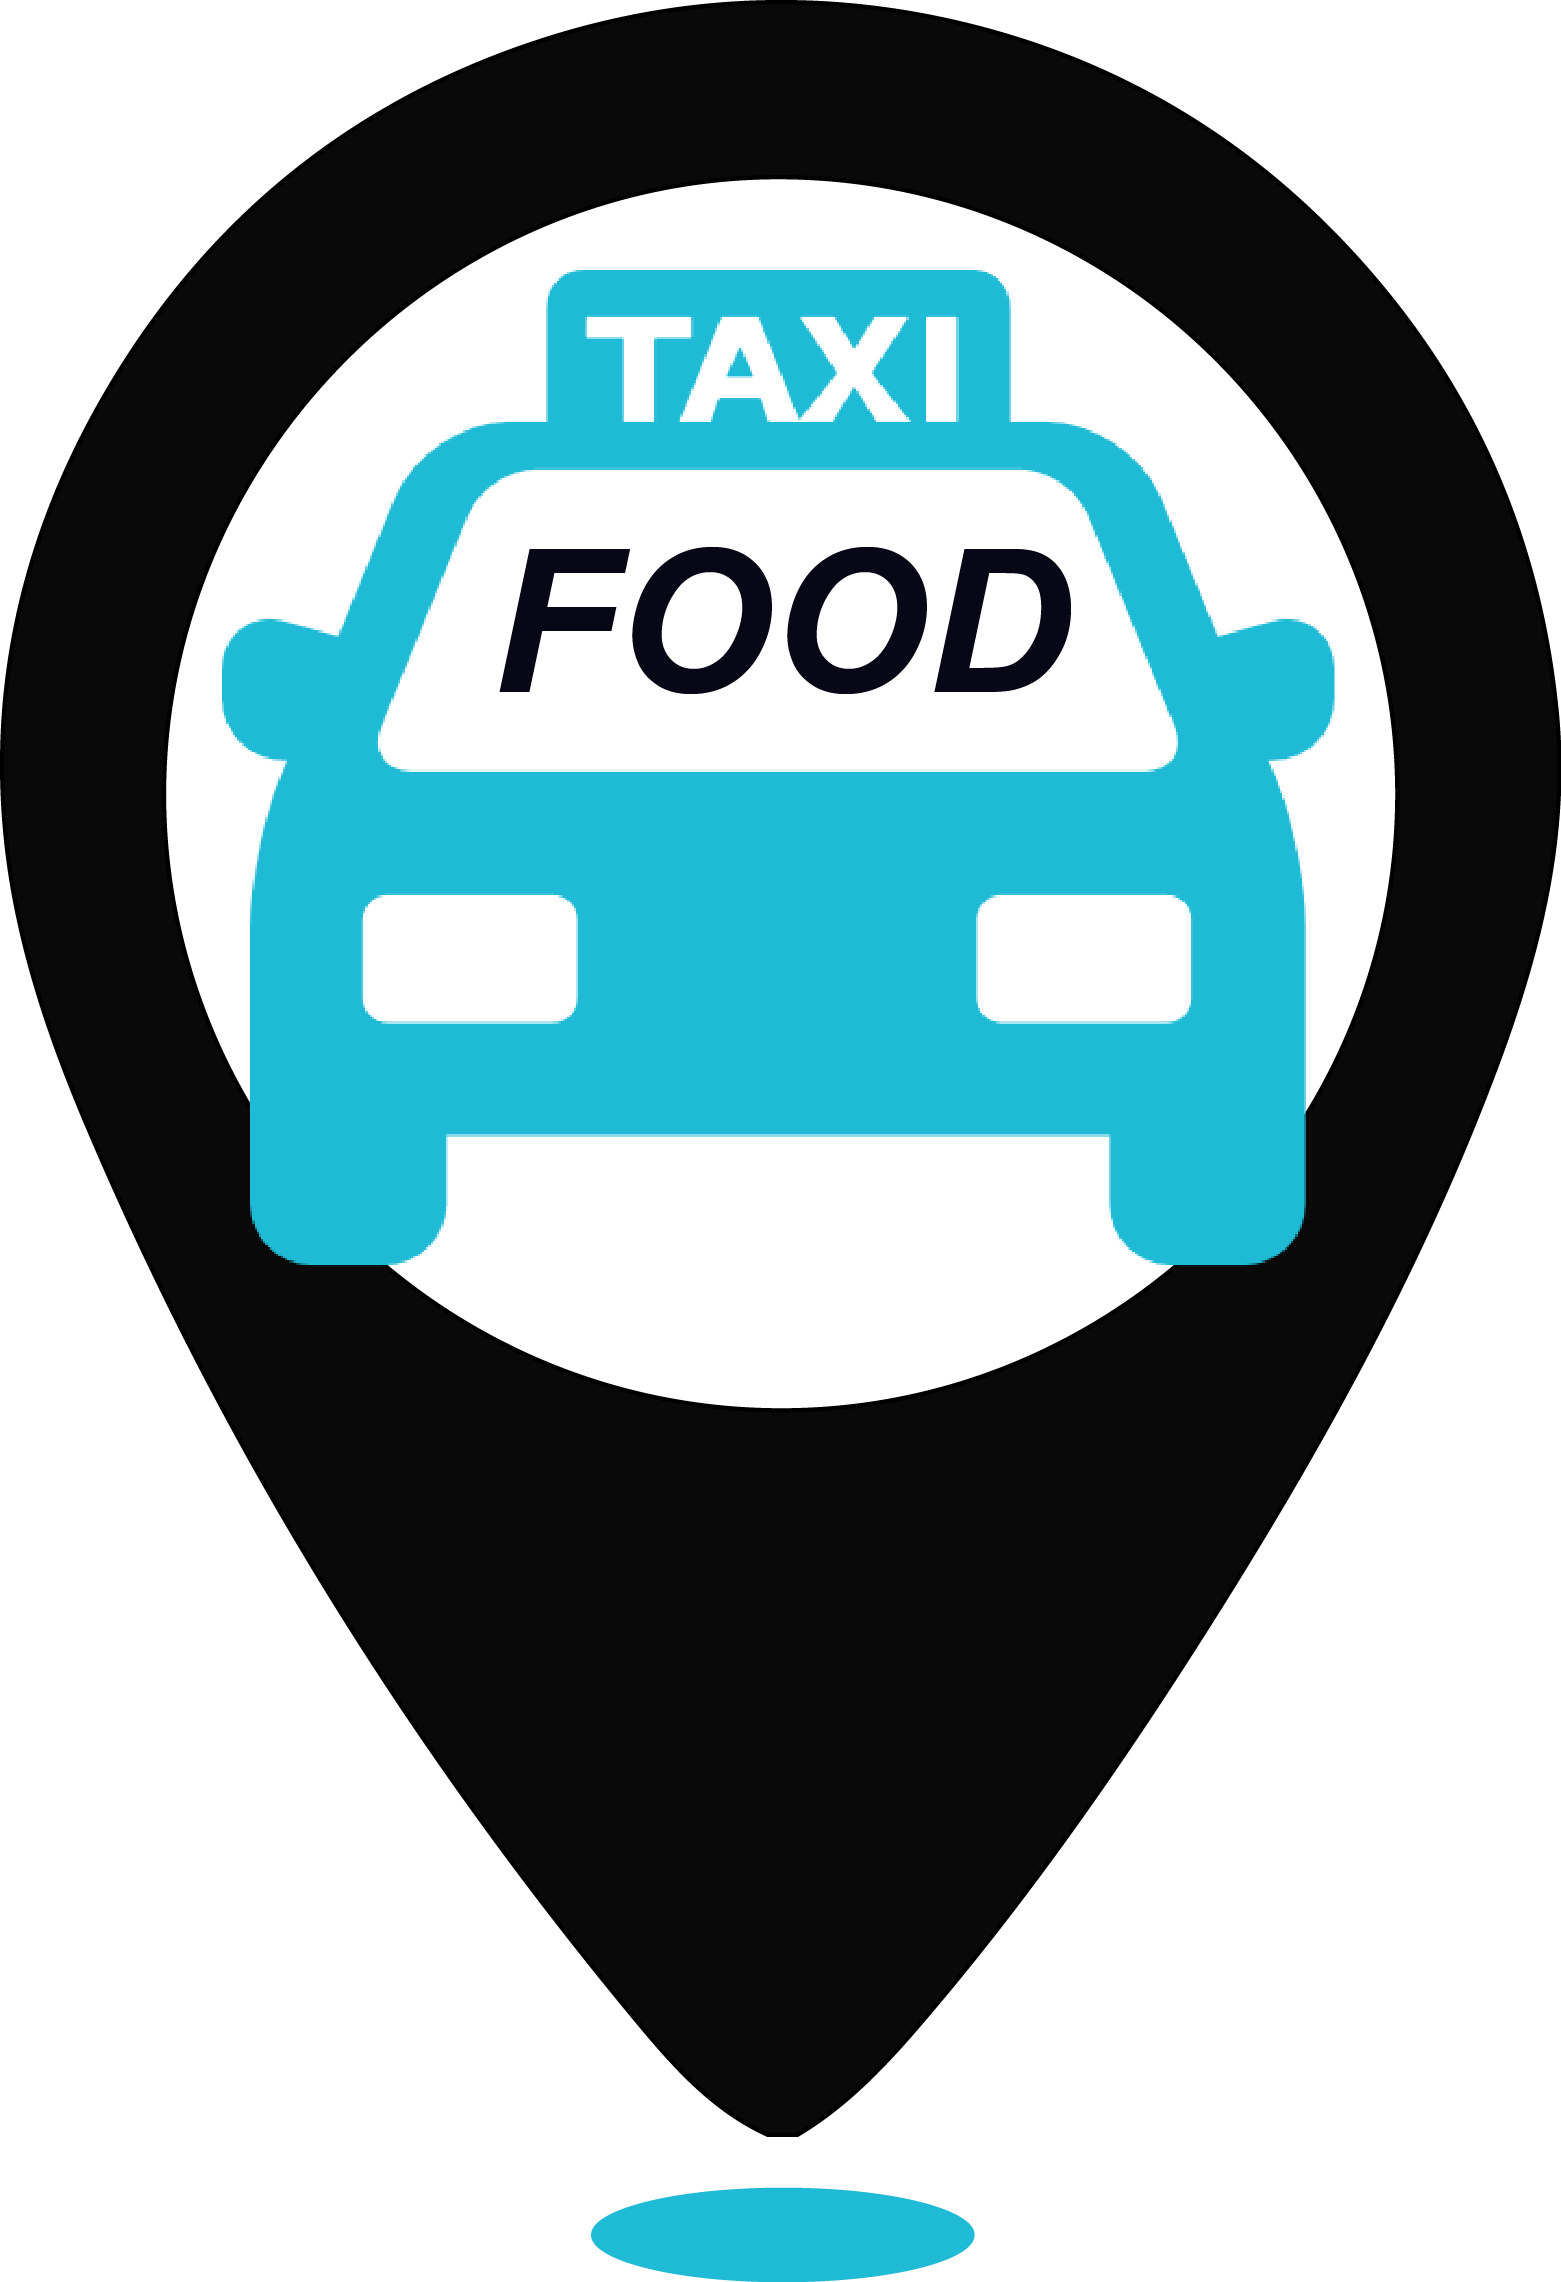 Фуд такси отзывы. Логотип такси. Фуд такси. Taxi food логотип. Такси еда СПБ.